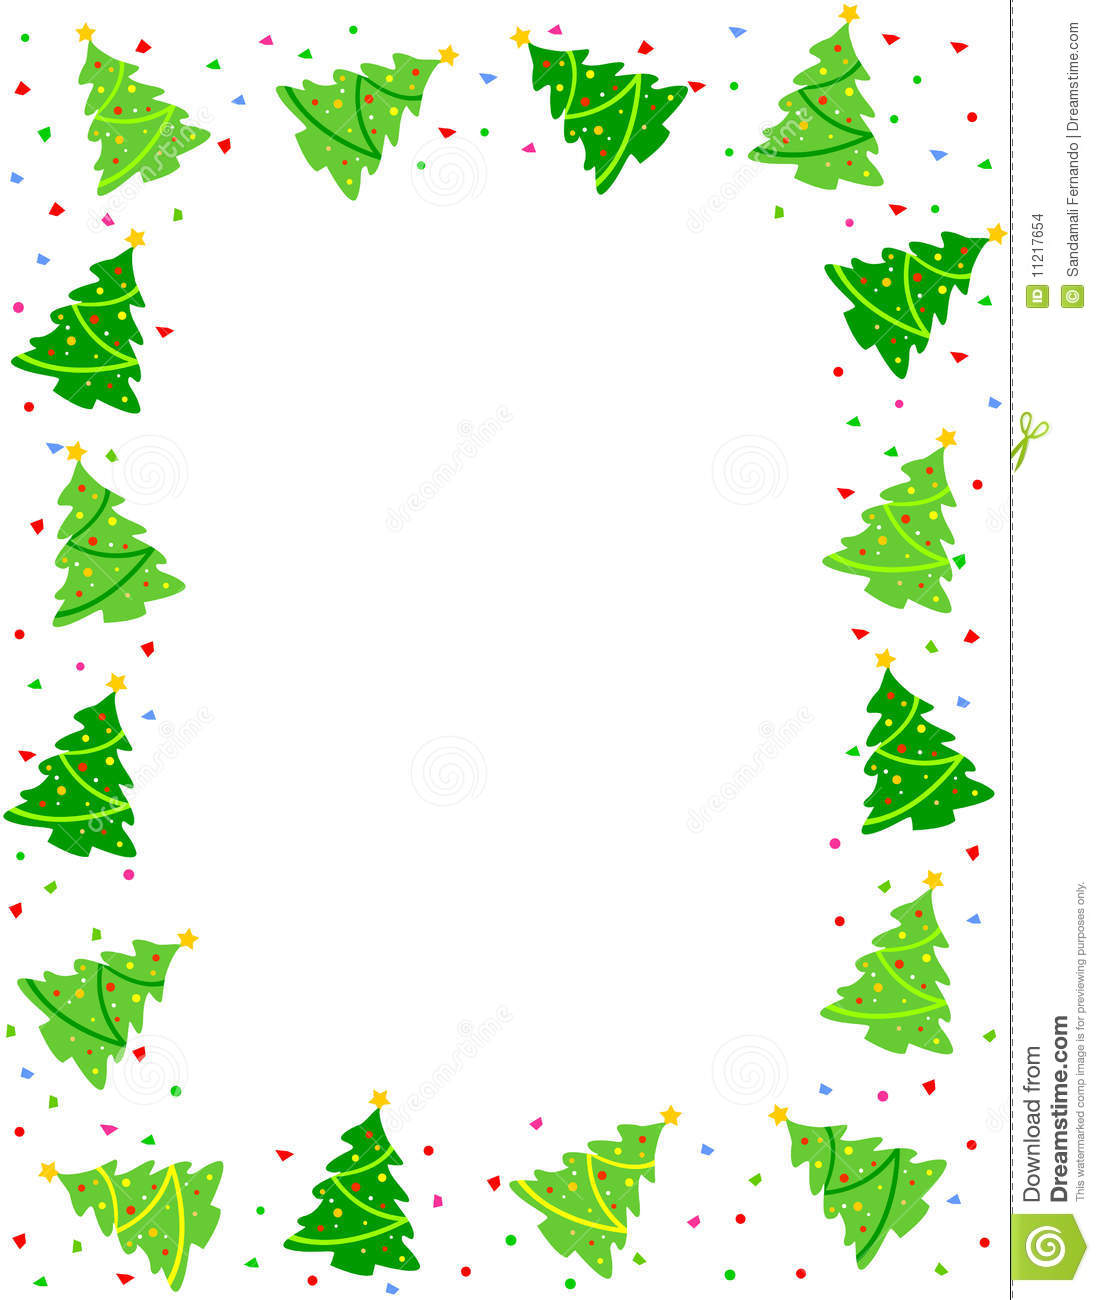 Christmas Tree Borders Clip A - Christmas Border Clip Art